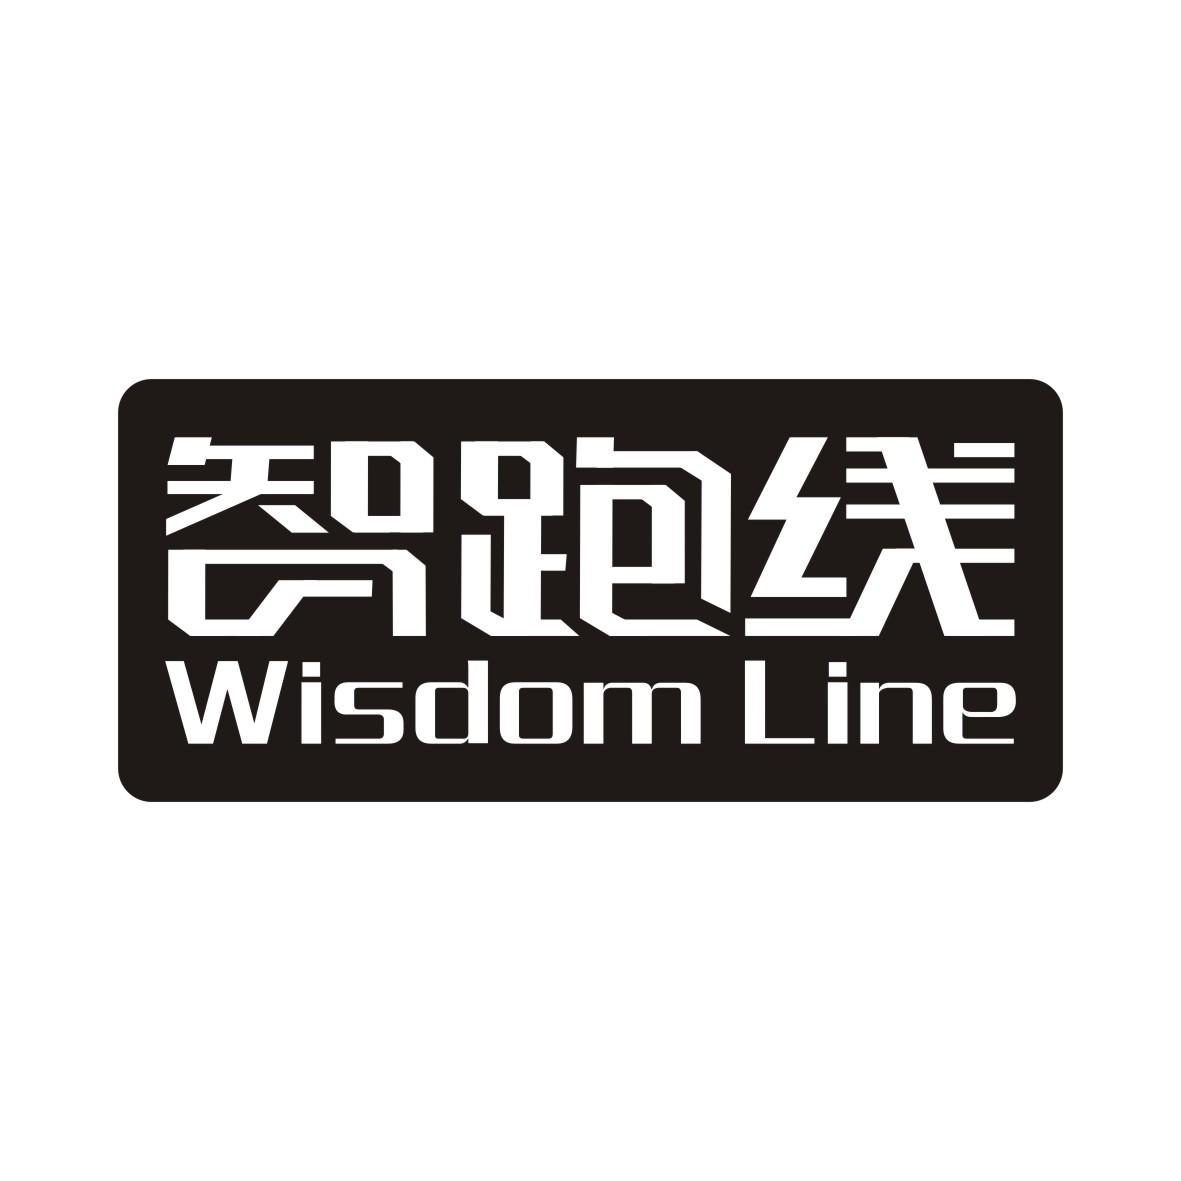  WISDOM LINE